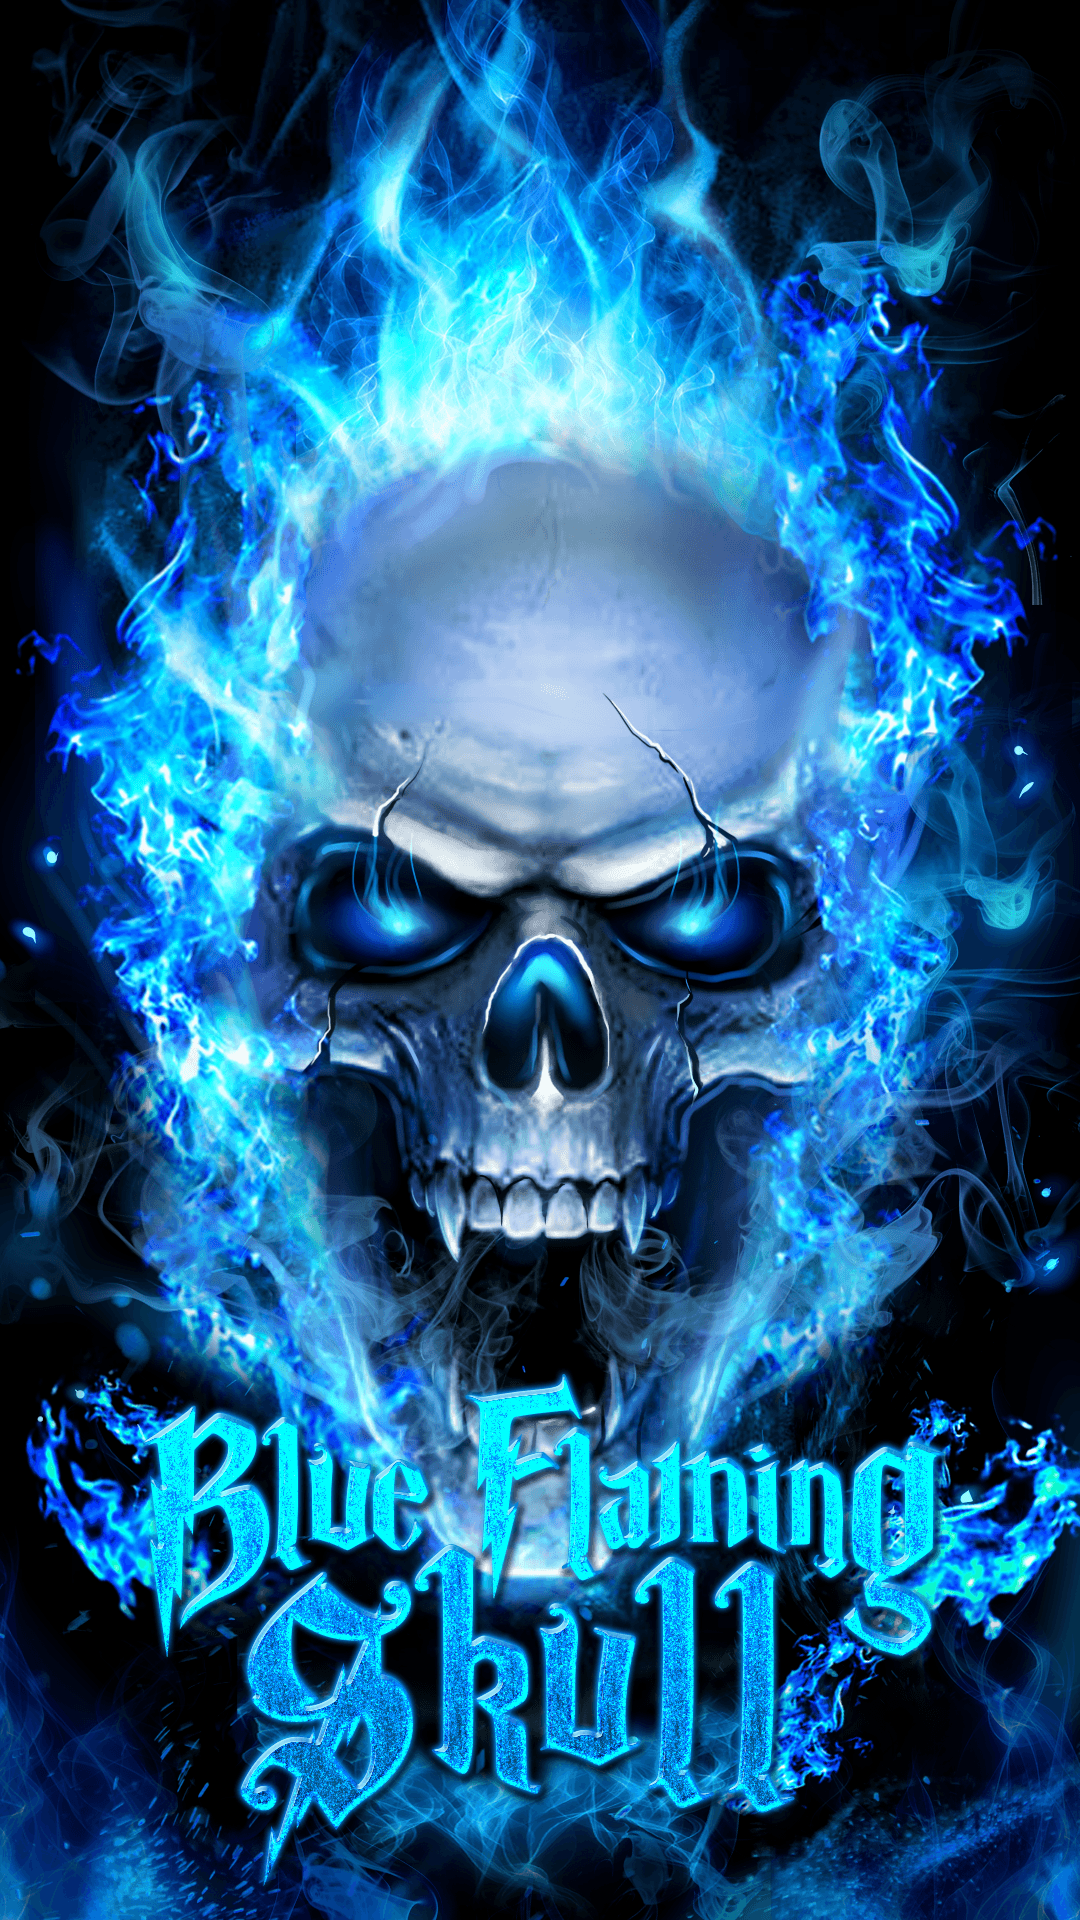 Blue flaming skull live wallpaper!. Android live wallpaper